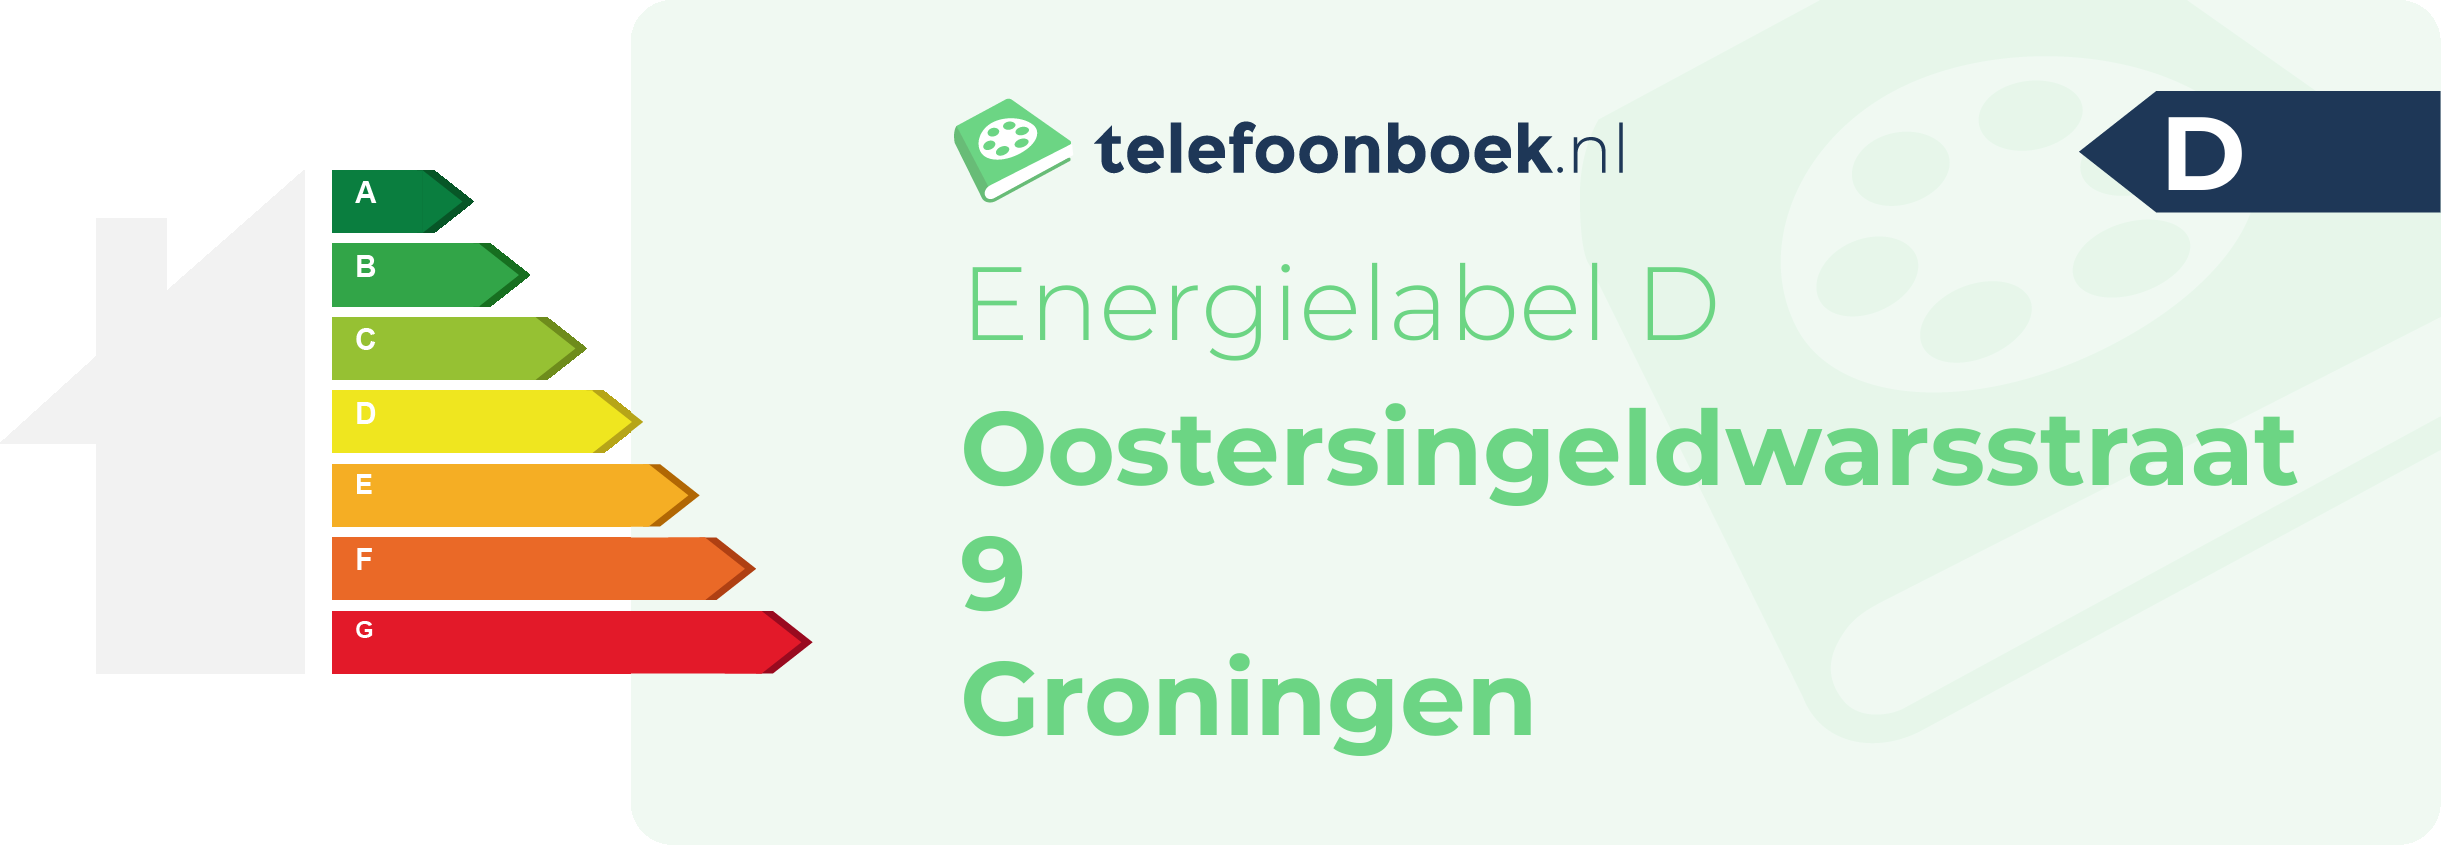 Energielabel Oostersingeldwarsstraat 9 Groningen